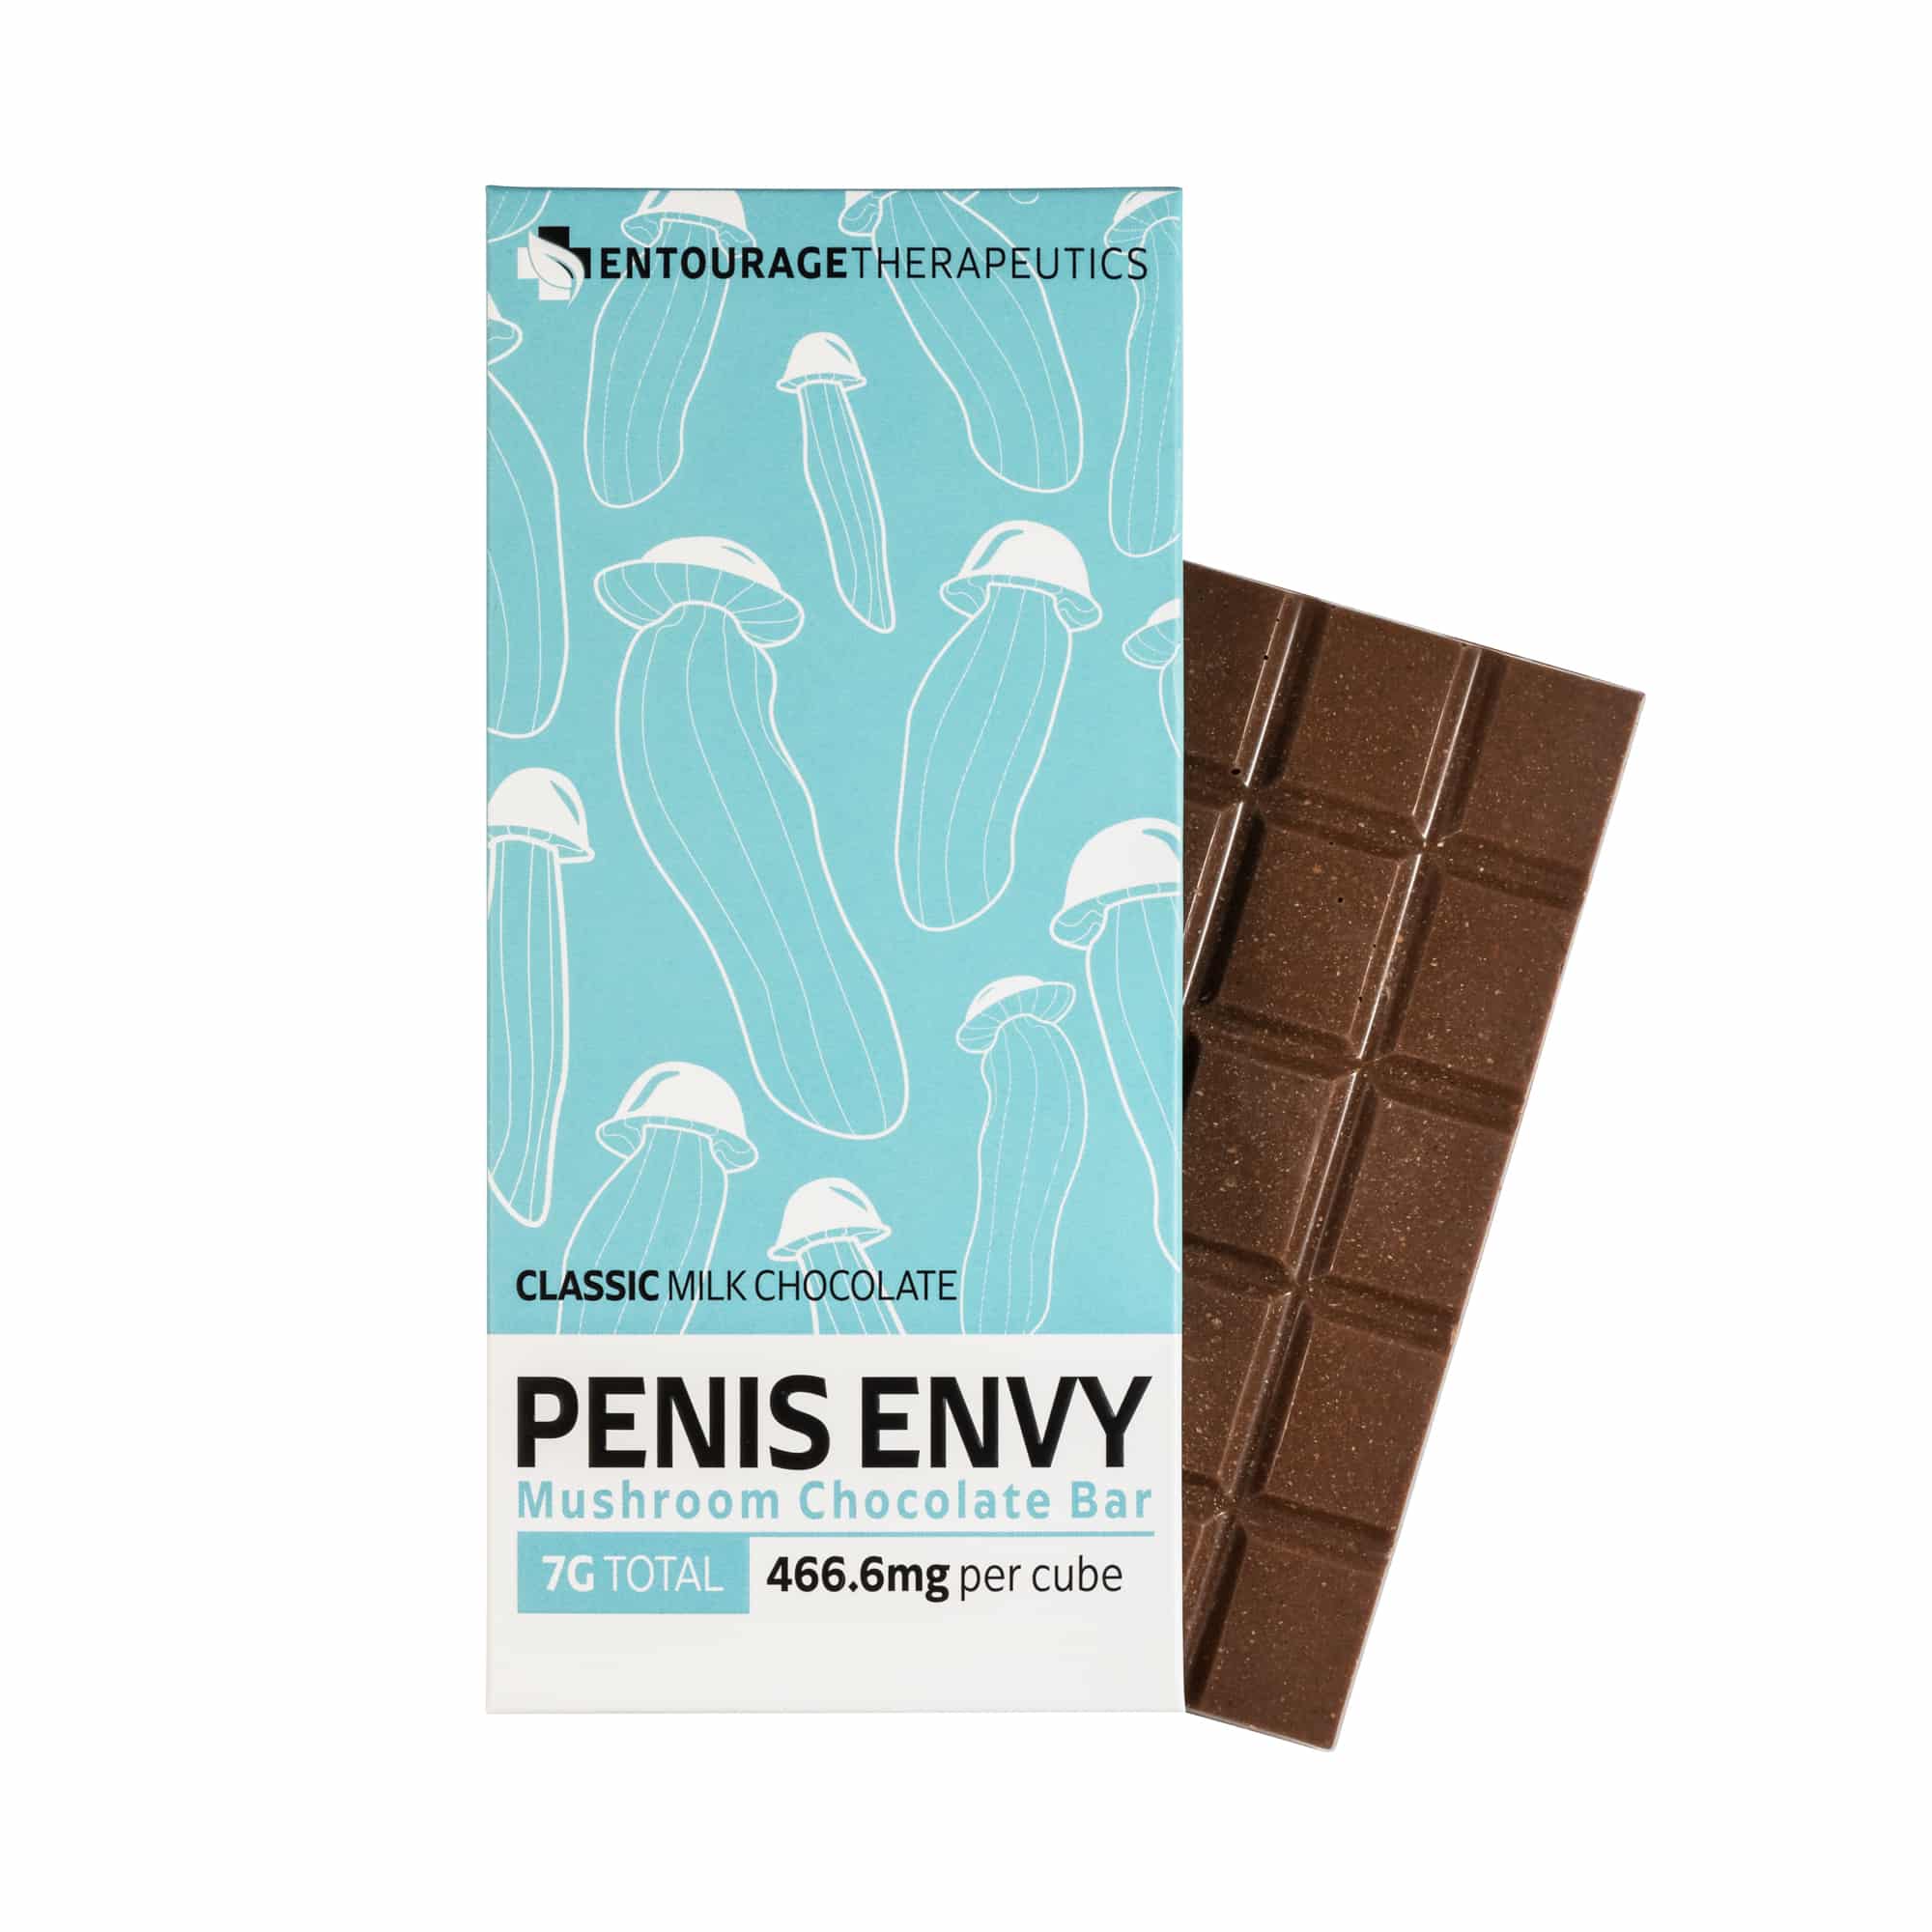 Entourage penis envy milk chocolate – 7g